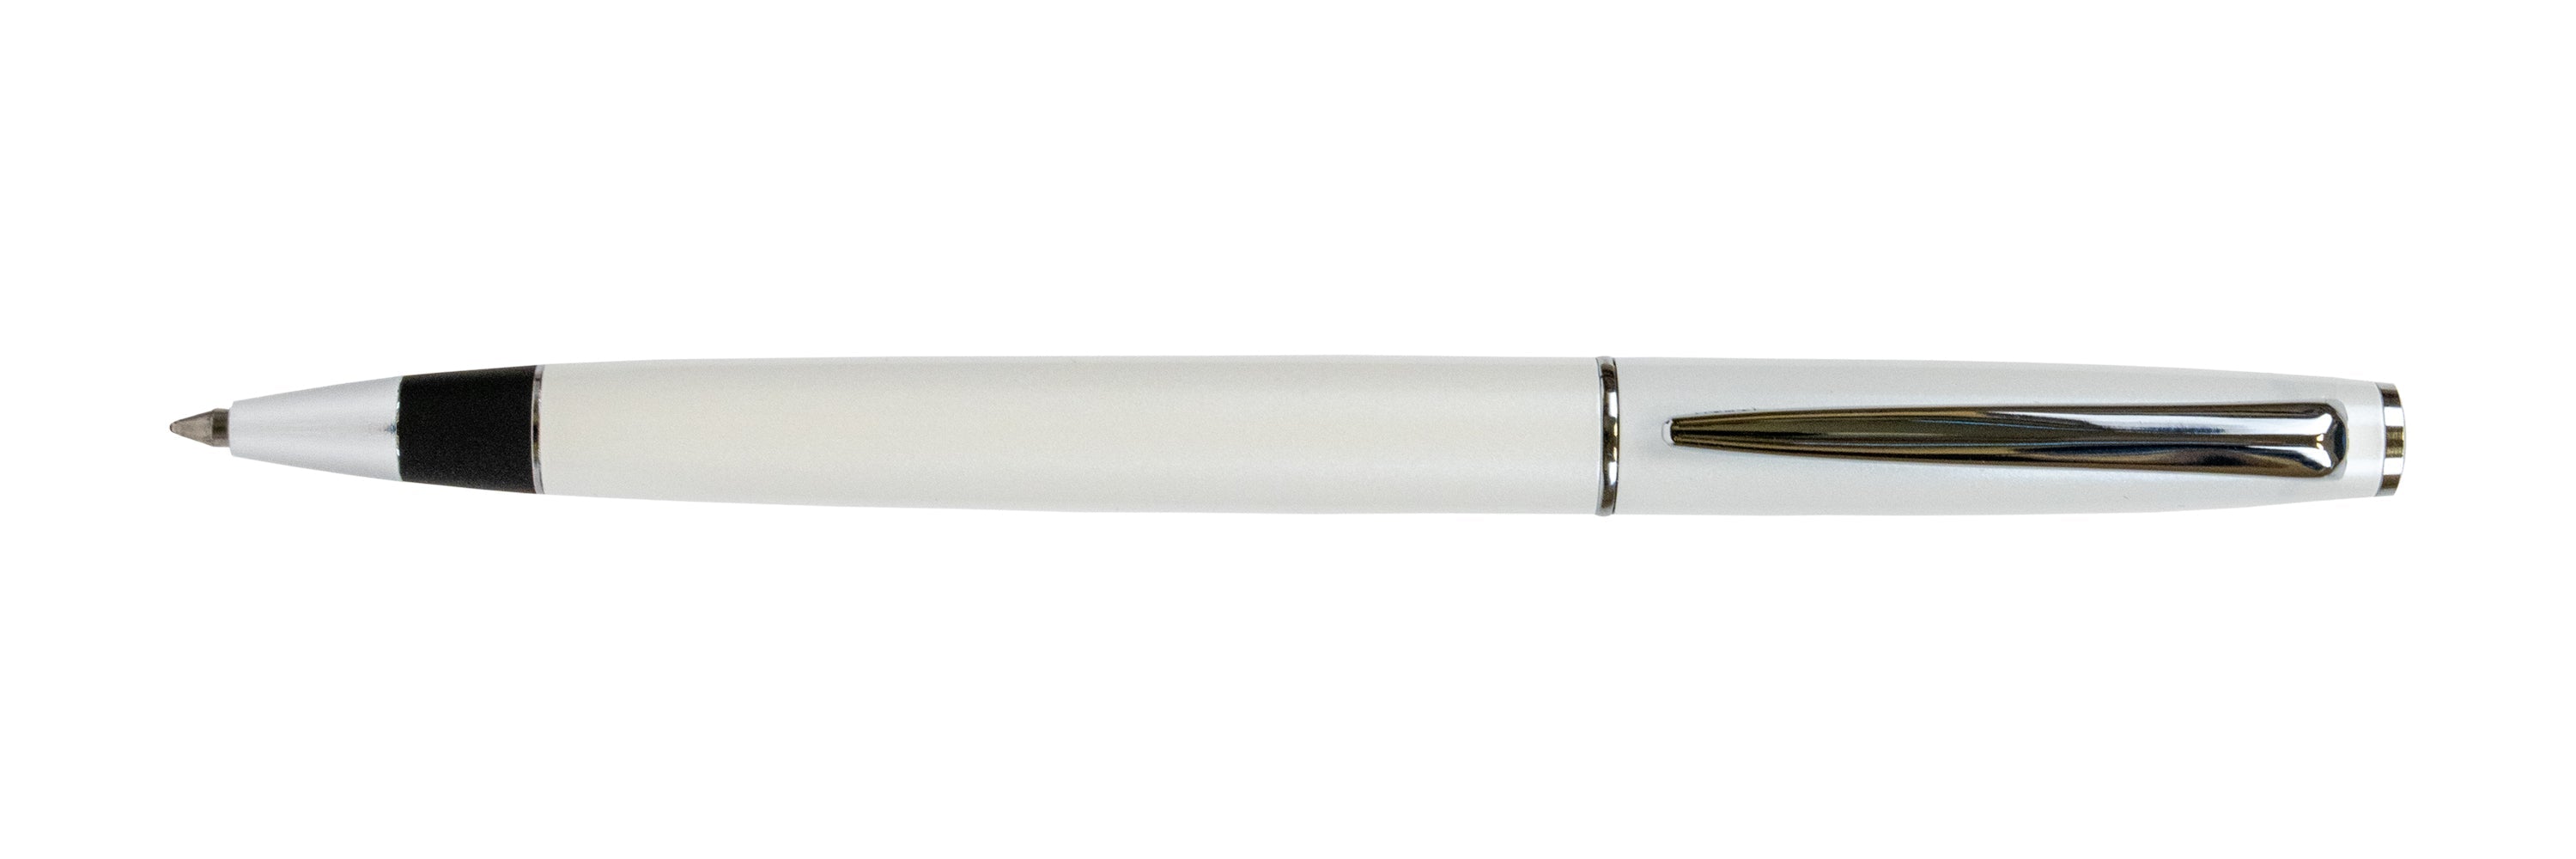 Jetstream Prime Twist Ballpoint Pen Gift Set with 2 Black 0.7mm Refills and Black Gift Box